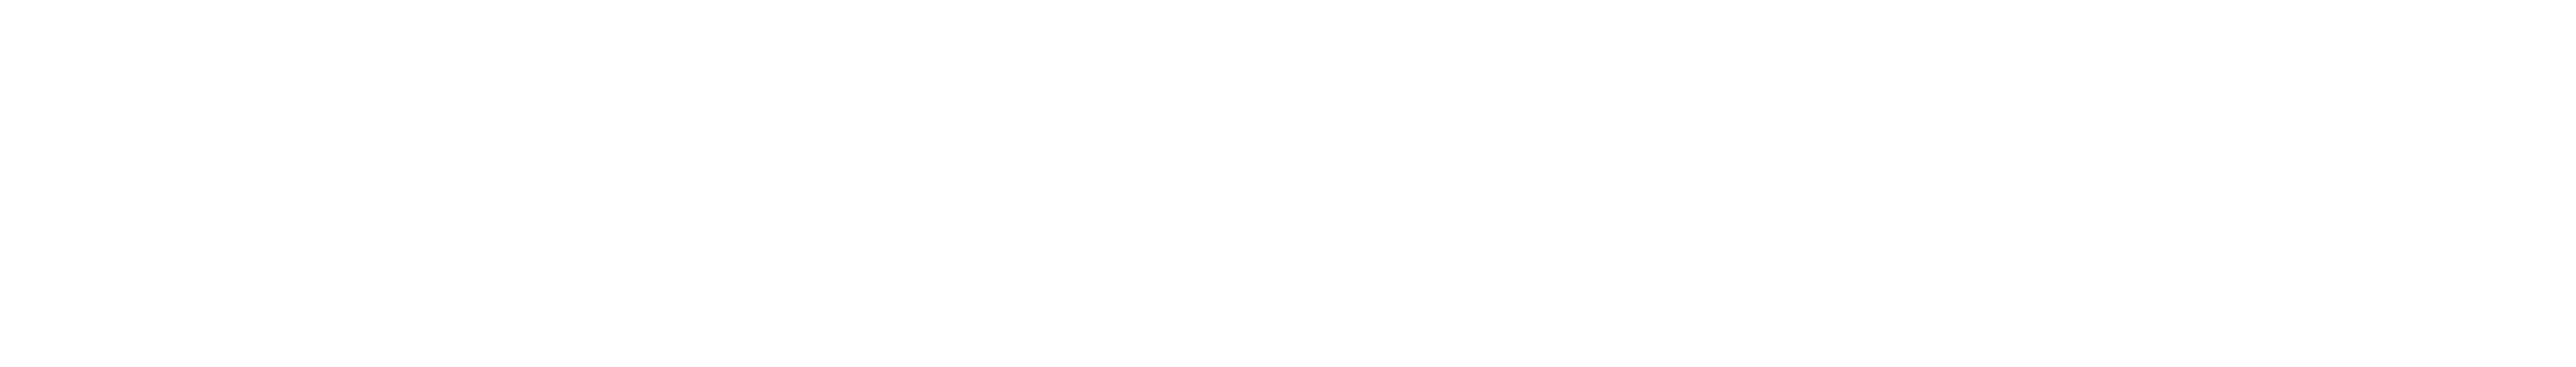 All the Boys Love Mandy Lane logo